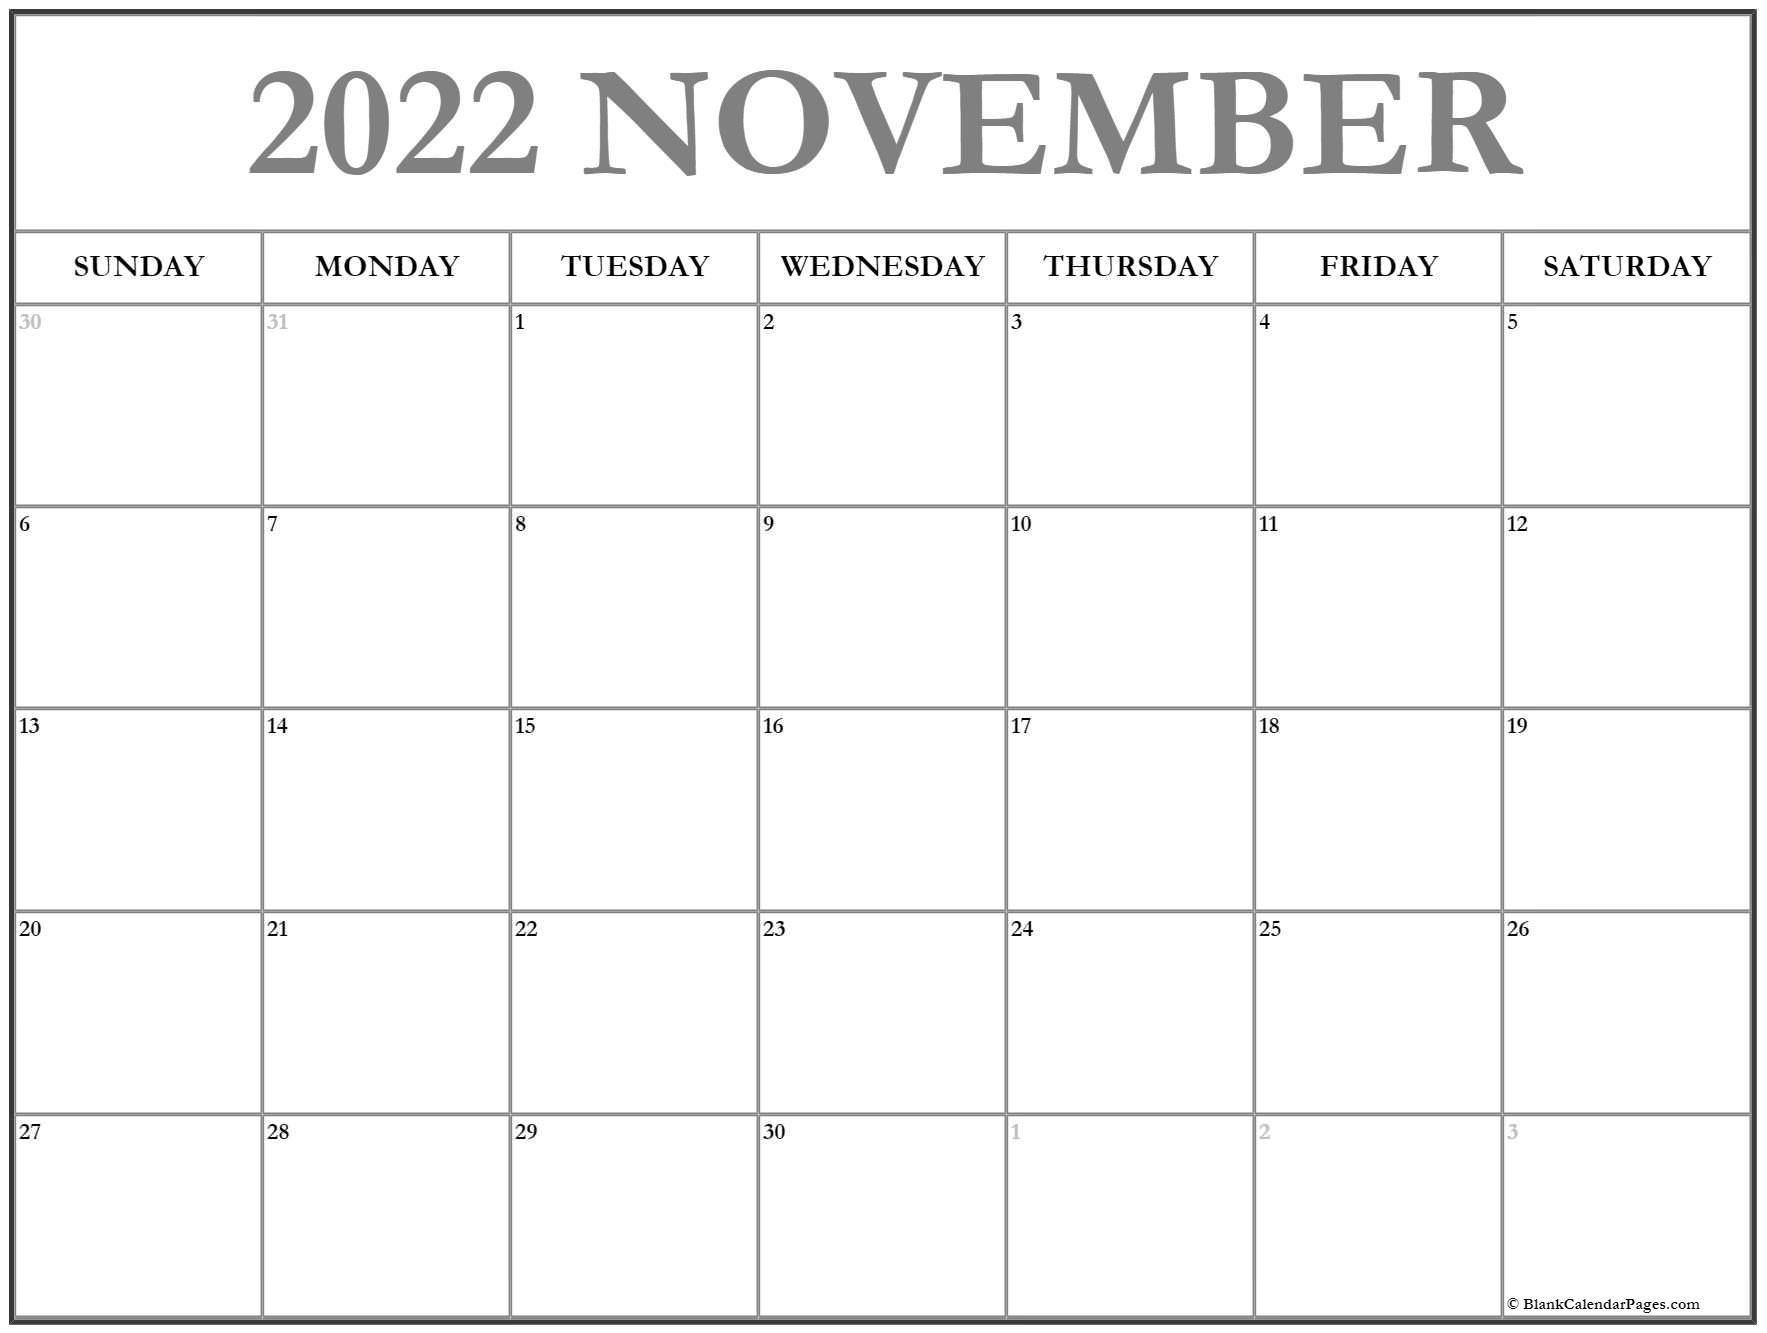 Take November 2022 Blank Calendar